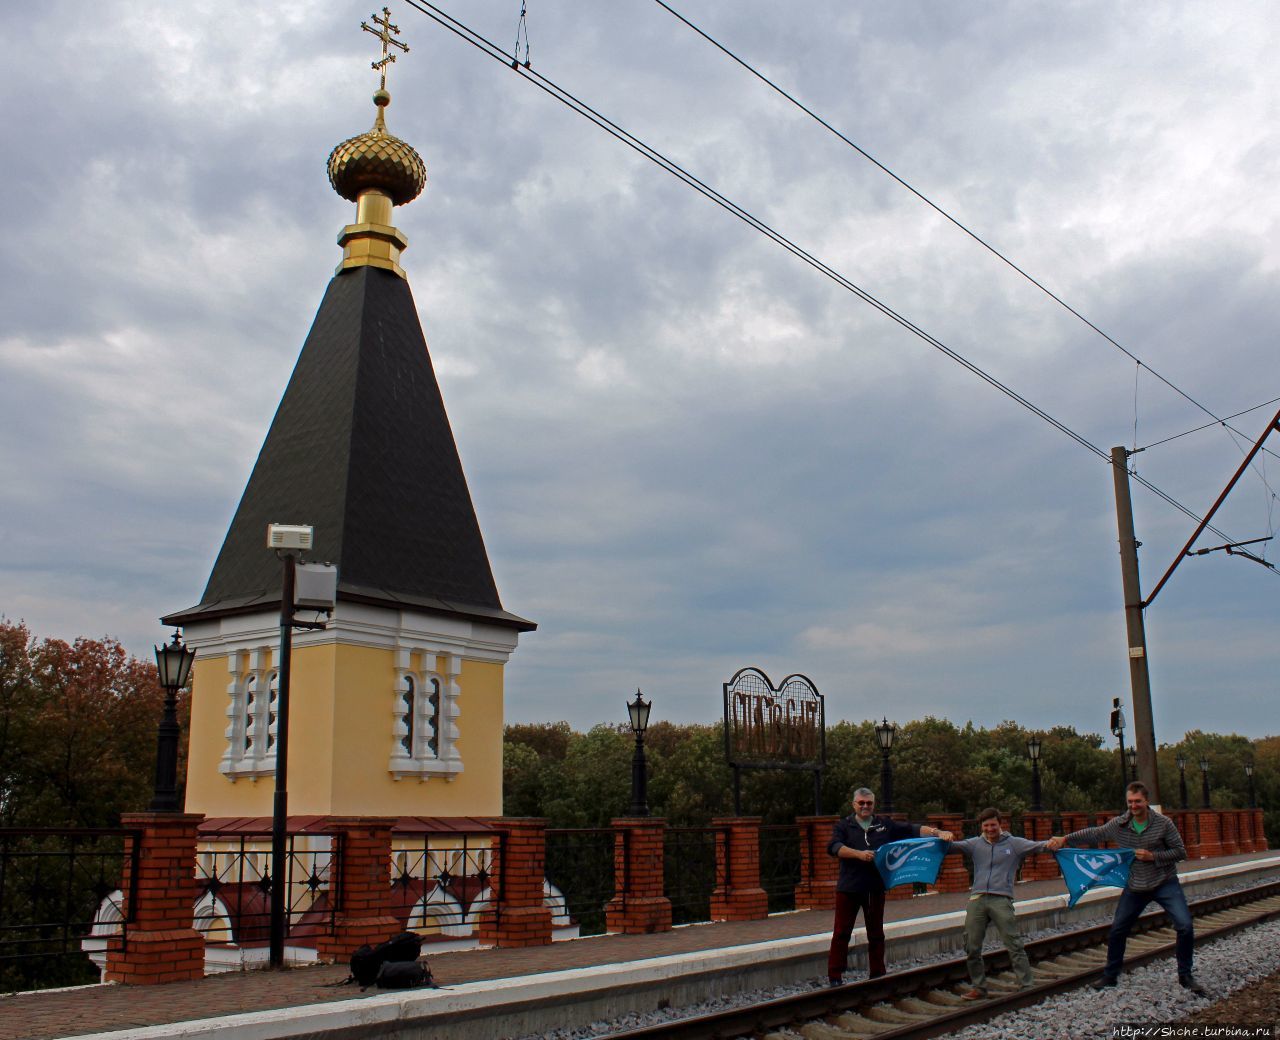 Рельсы-рельсы, шпалы-шпалы, ехал поезд Спасов Скит, Украина